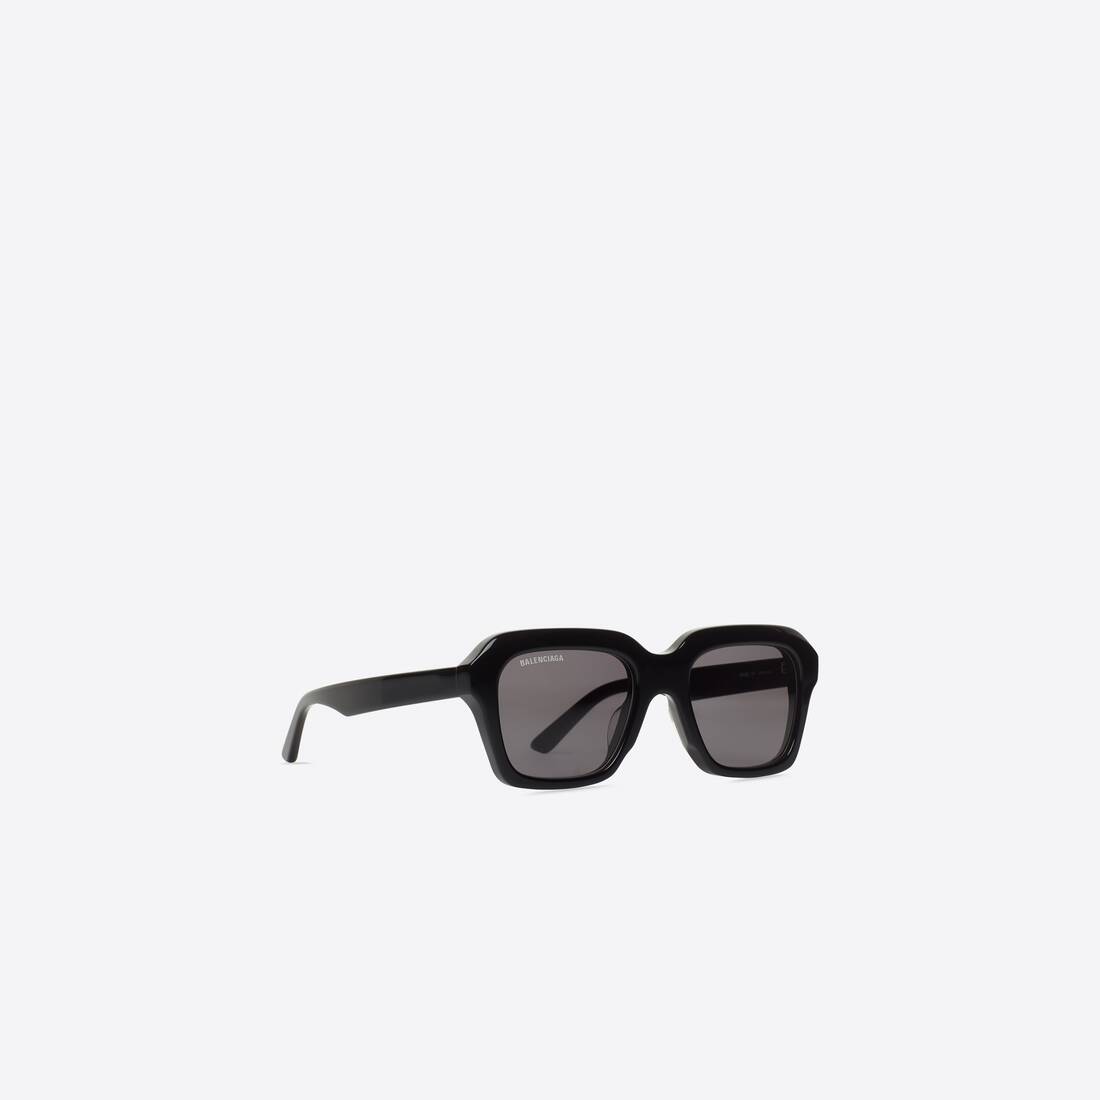 Power Rectangle Sunglasses in Black